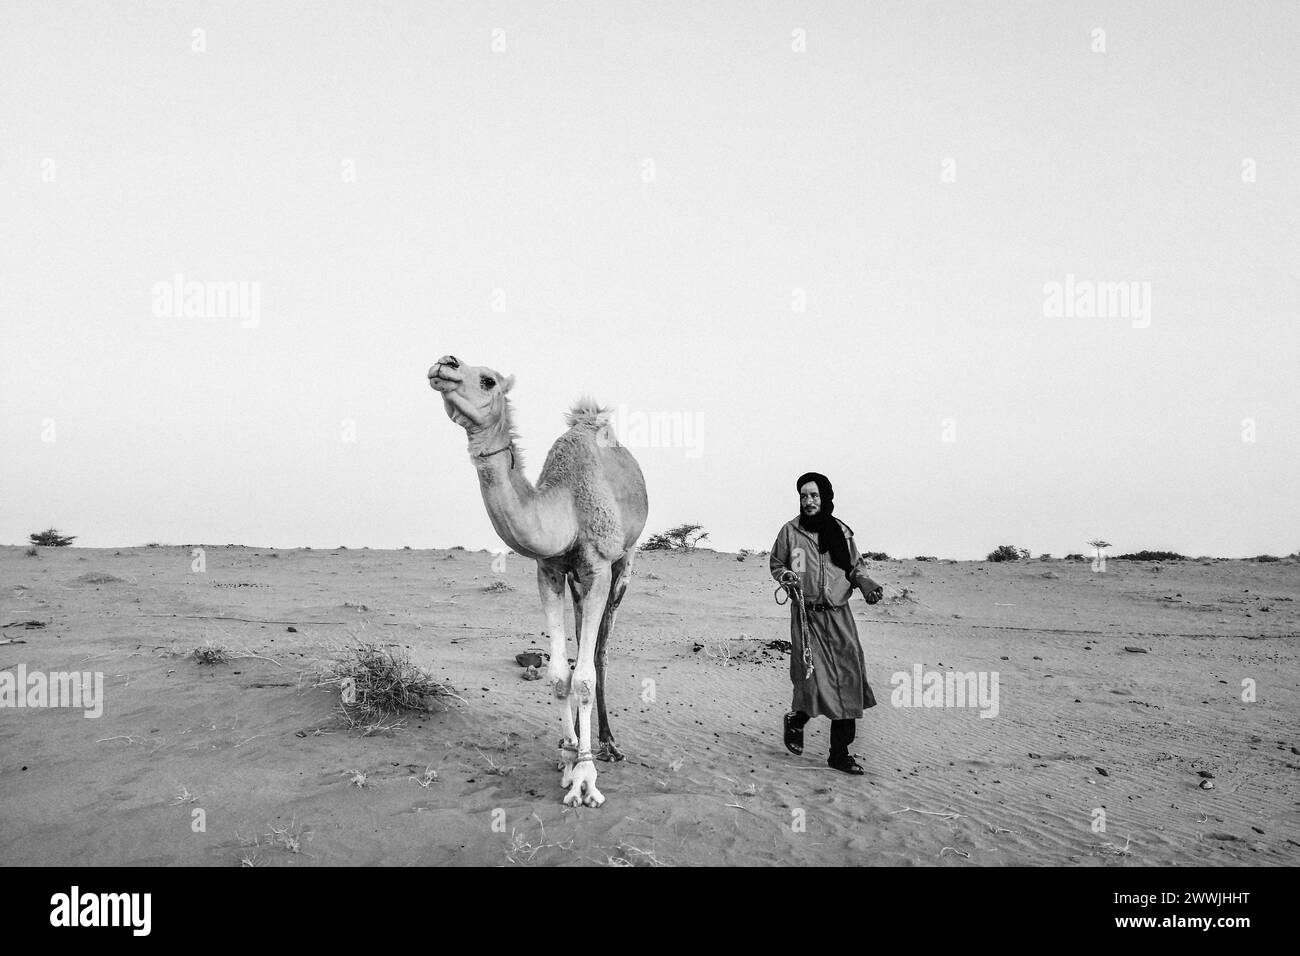 Mauritania, Surroundings of M'Hareth, camel drive, daily life Stock Photo